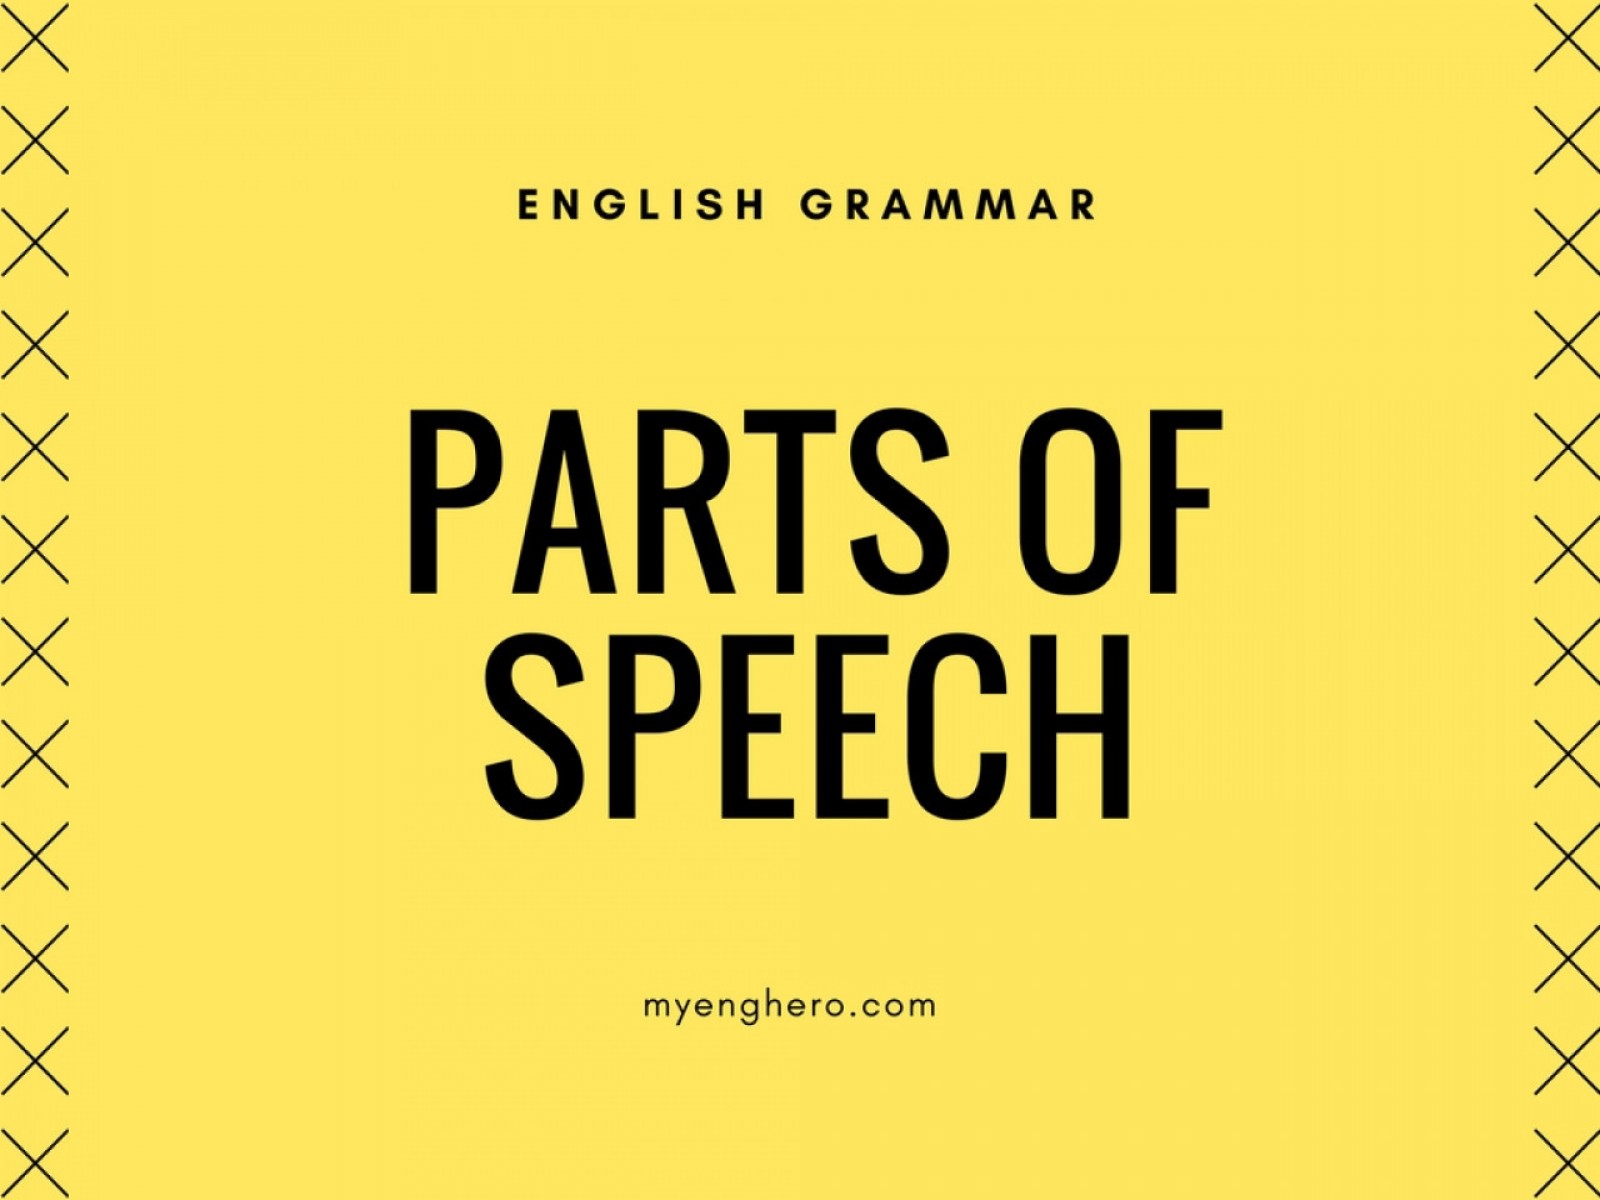 Parts of speech ส่วนของคำ